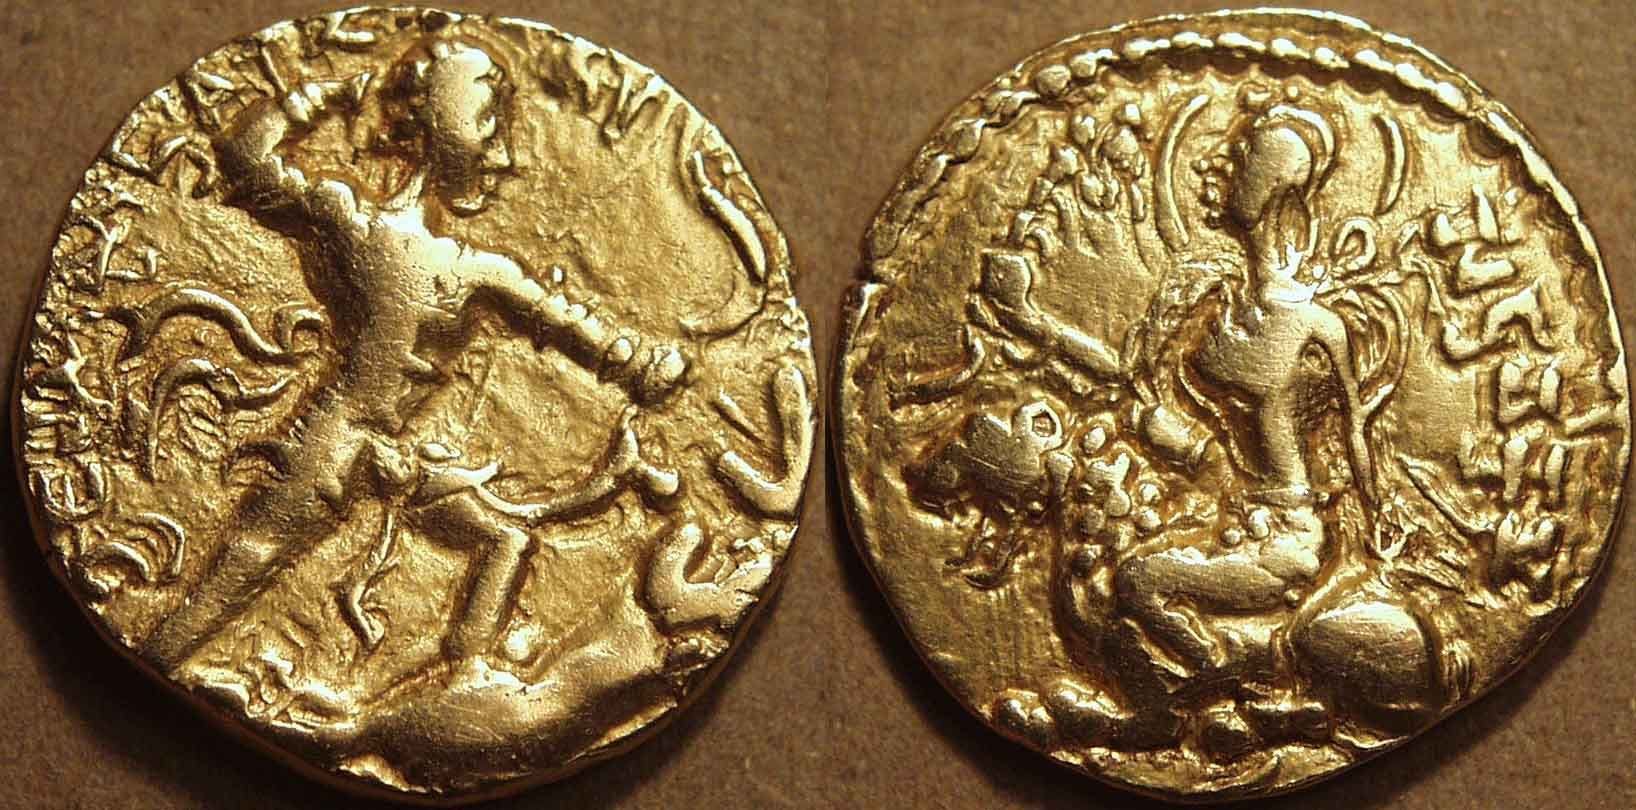 The lion-slayer type of Chandragupta II